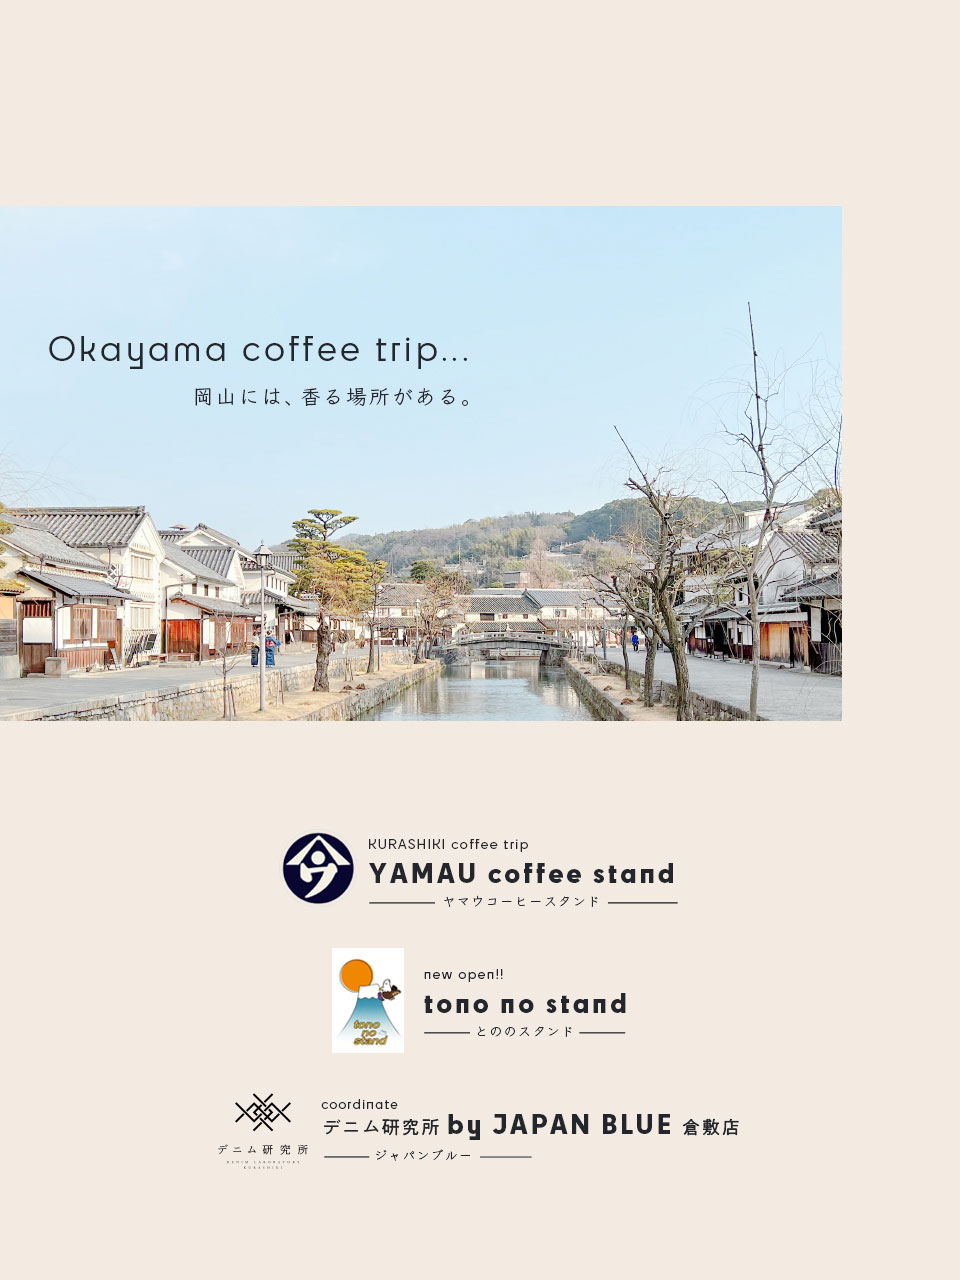 KURASHIKI coffee trip コーヒー好きな彼と倉敷美観地区でcoffee trip
